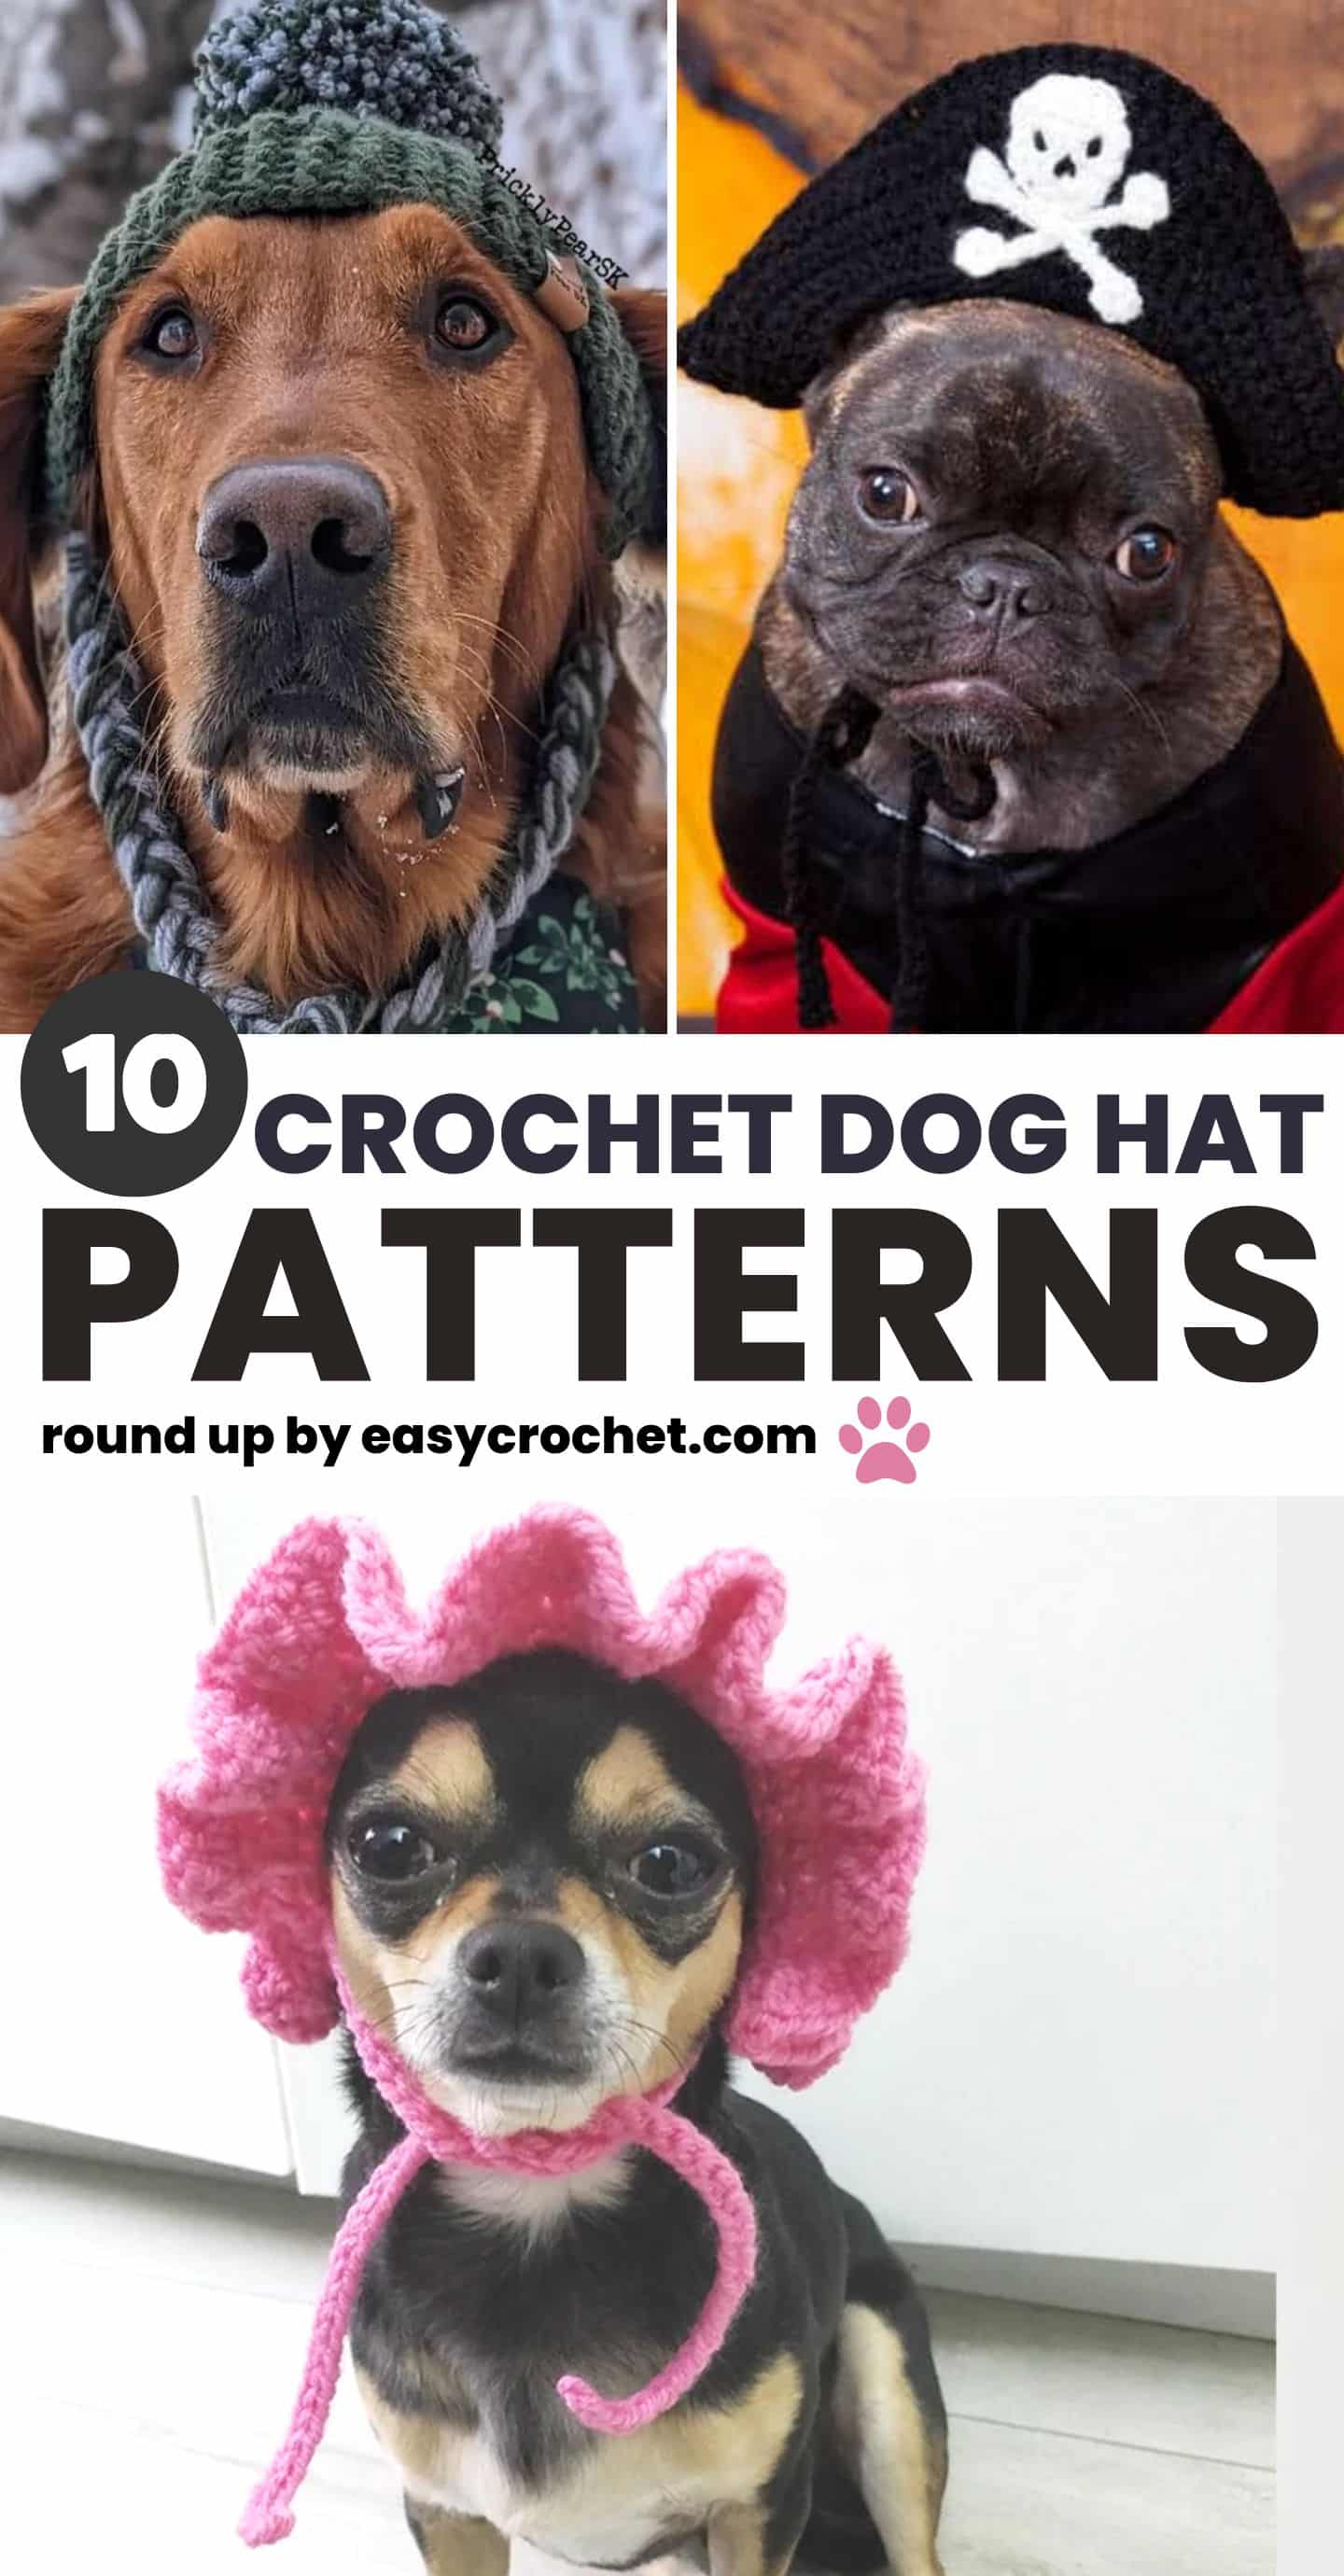 Too Cute Crochet Kit (Dog)